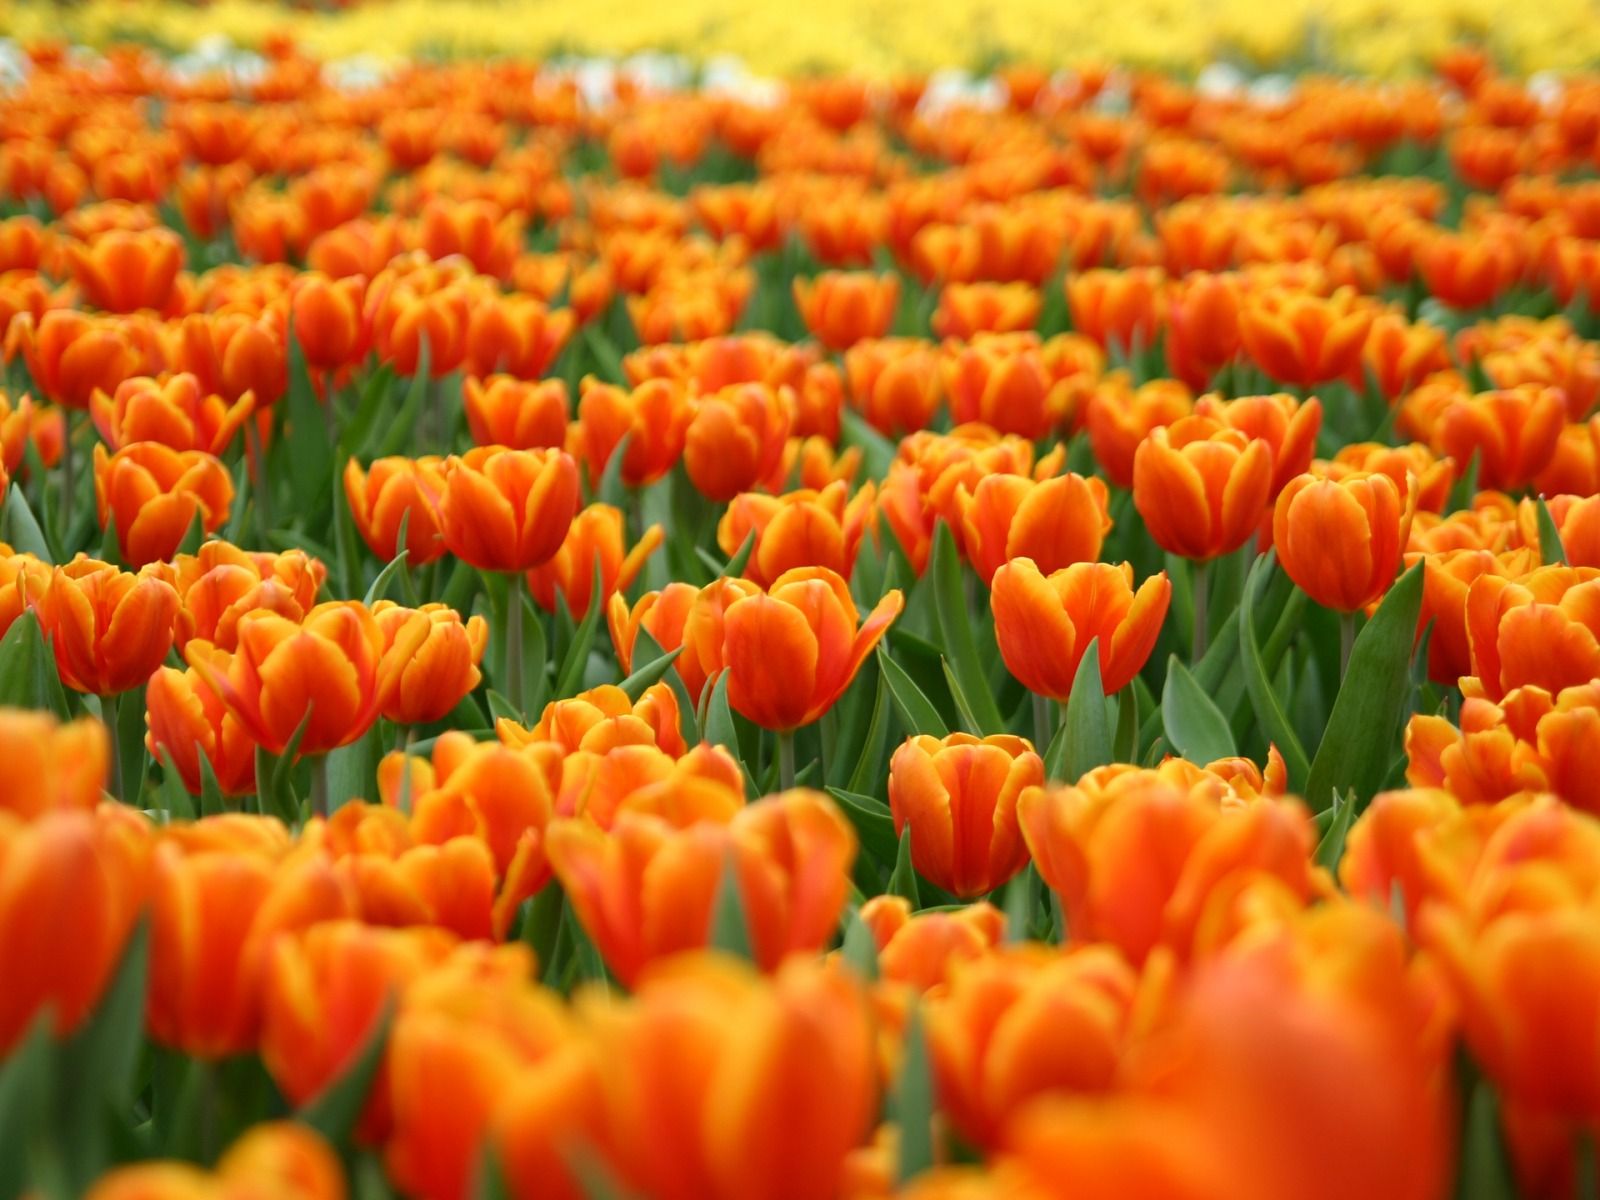 Orange Tulips Wallpaper Flowers Nature Wallpaper in jpg format for free download